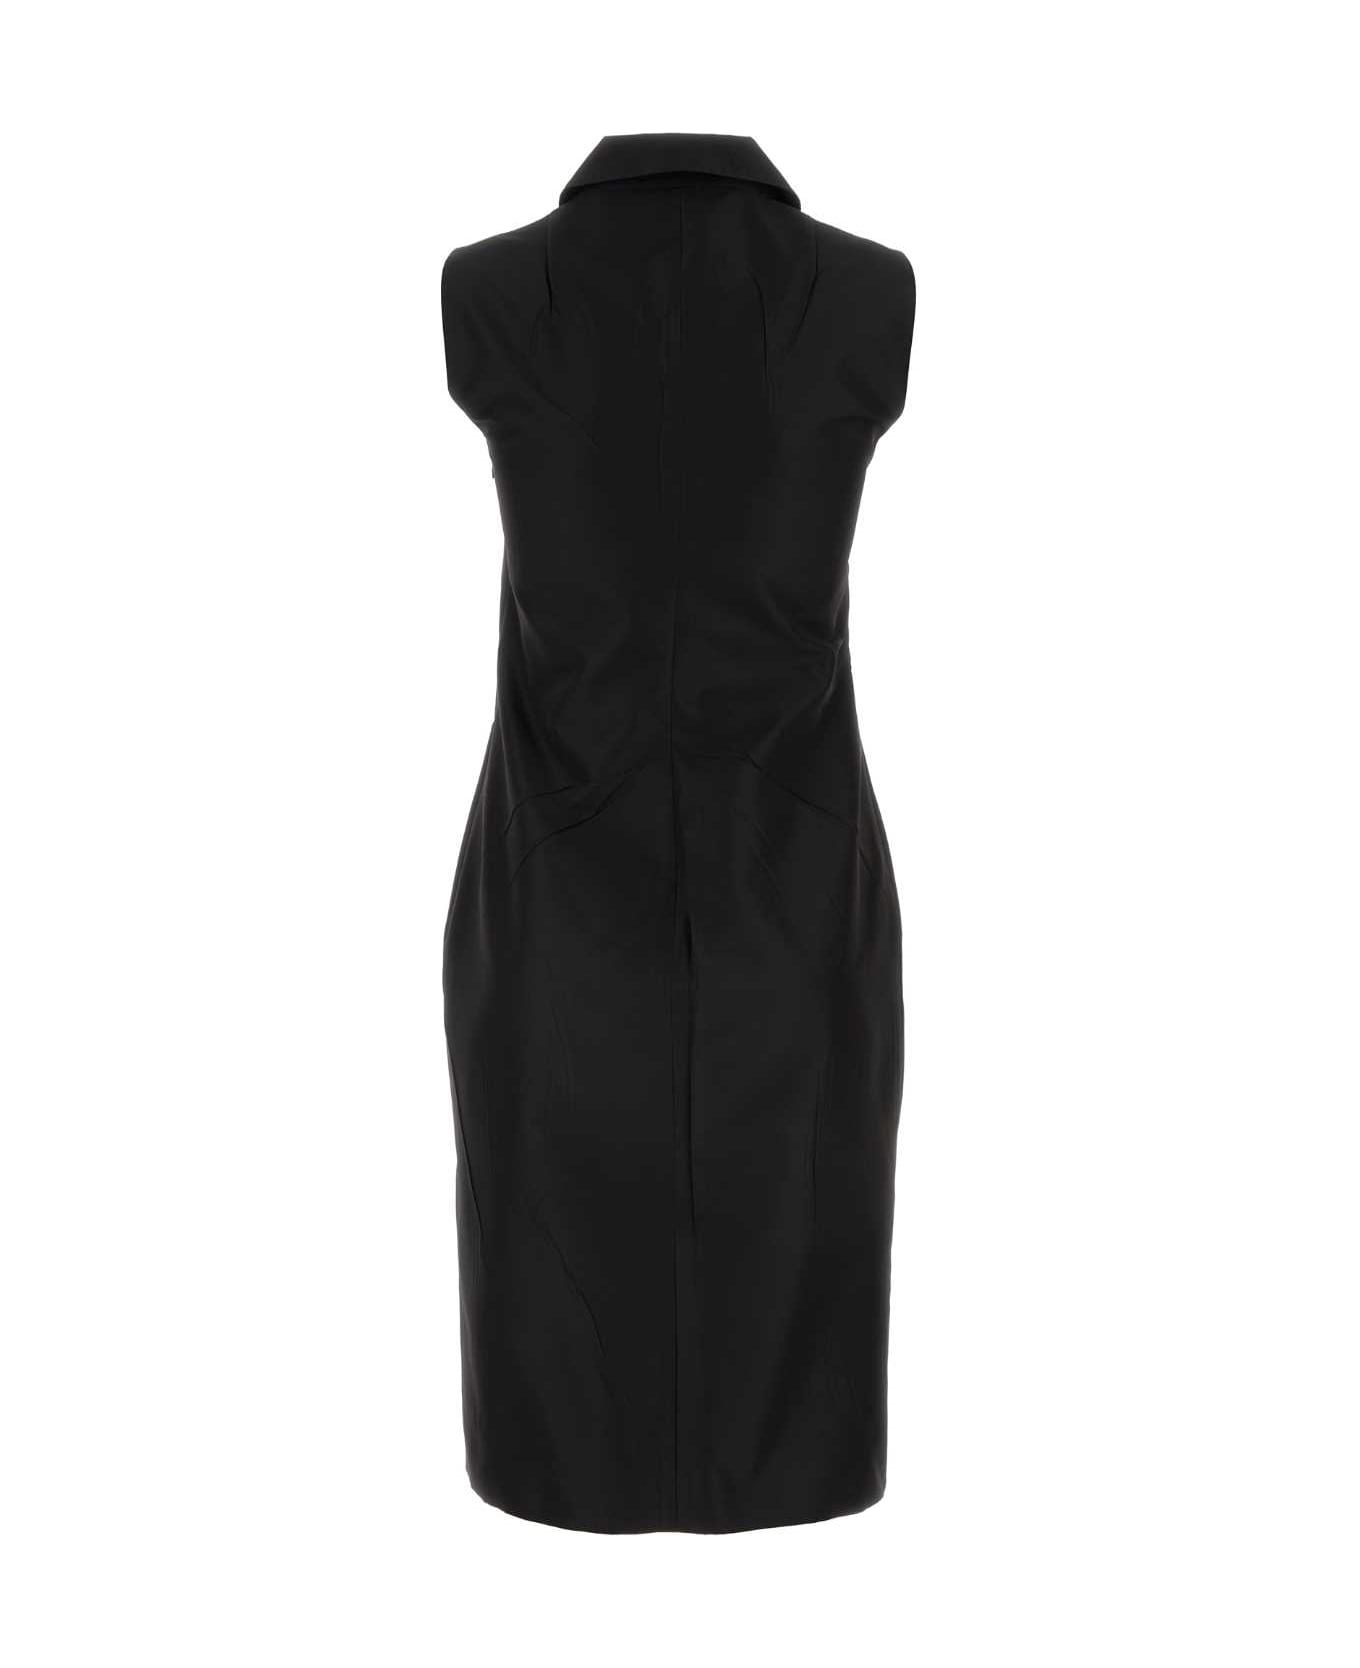 Prada Black Faille Dress - NERO